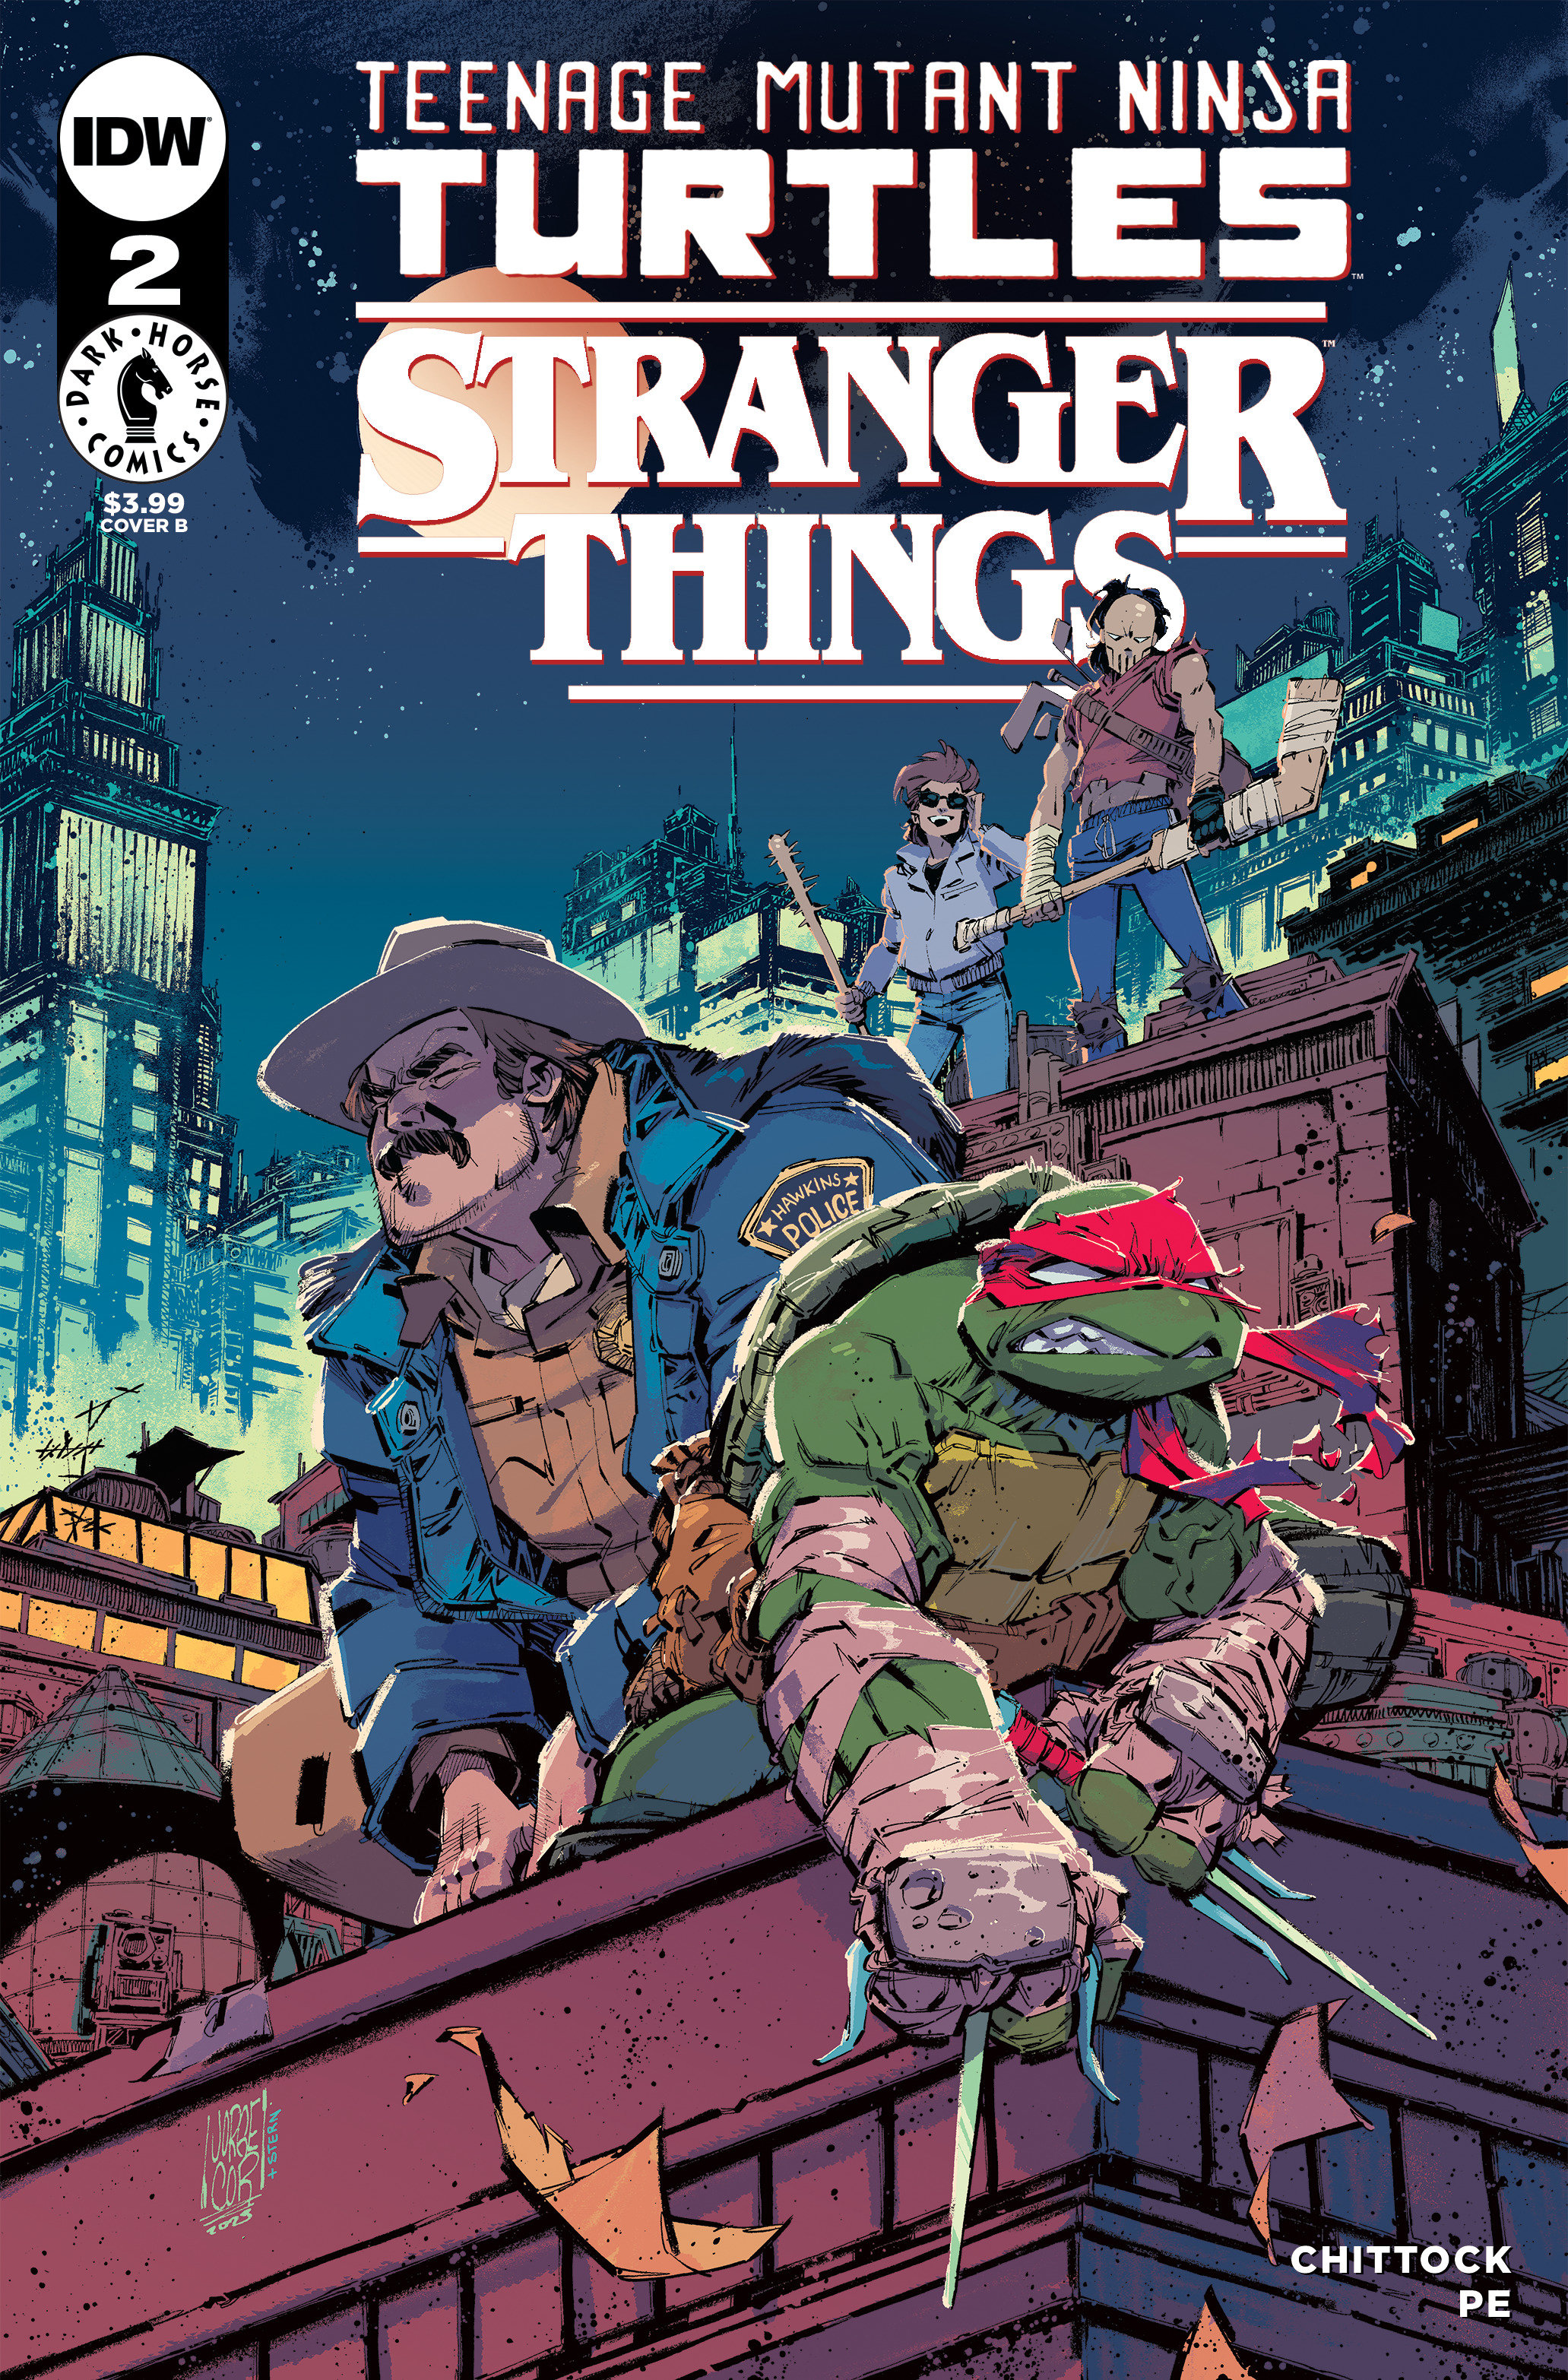 Teenage Mutant Ninja Turtles X Stranger Things #2 Cover B Corona